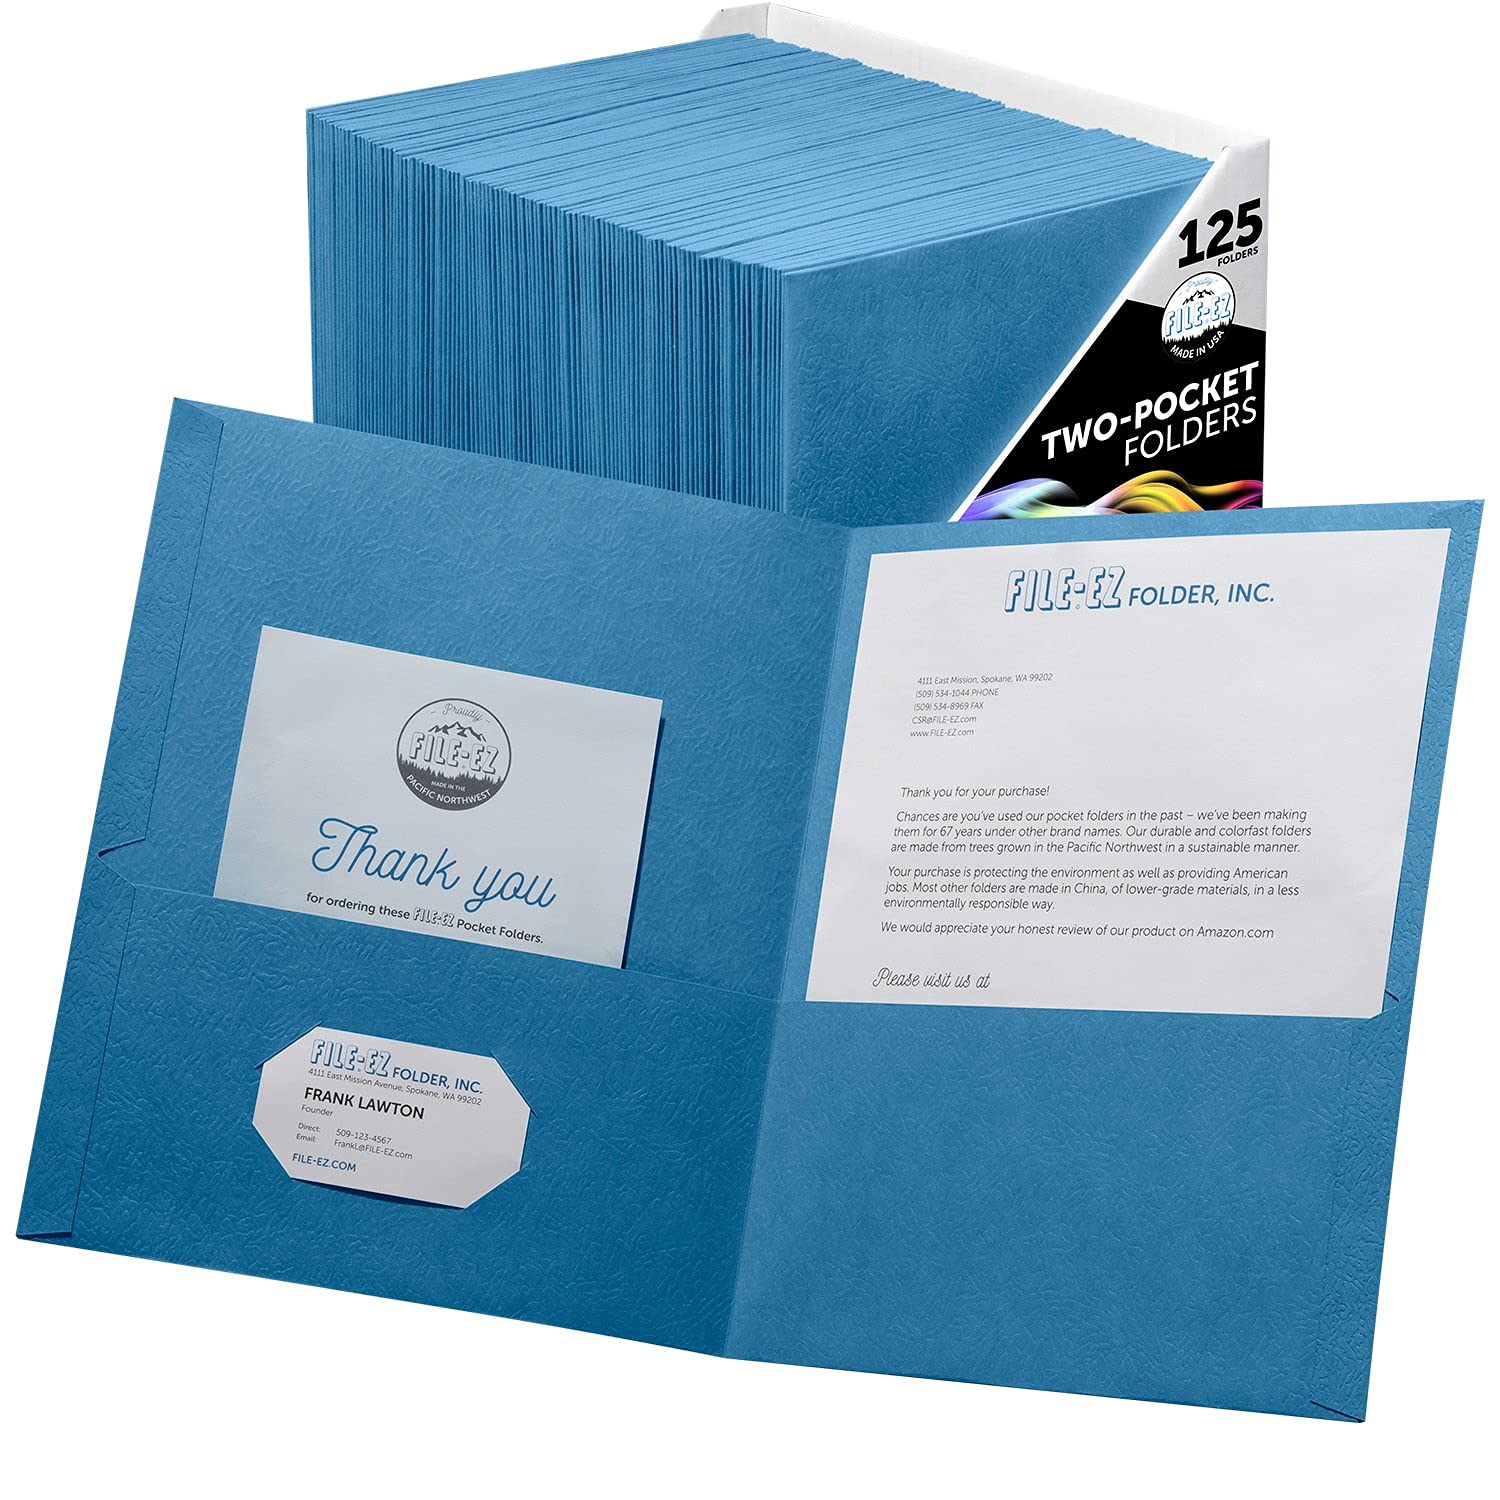 FILE-EZ Two-Pocket Folders, Light Blue, 125-Pack, Textured Paper, Letter Size (EZ-32420)